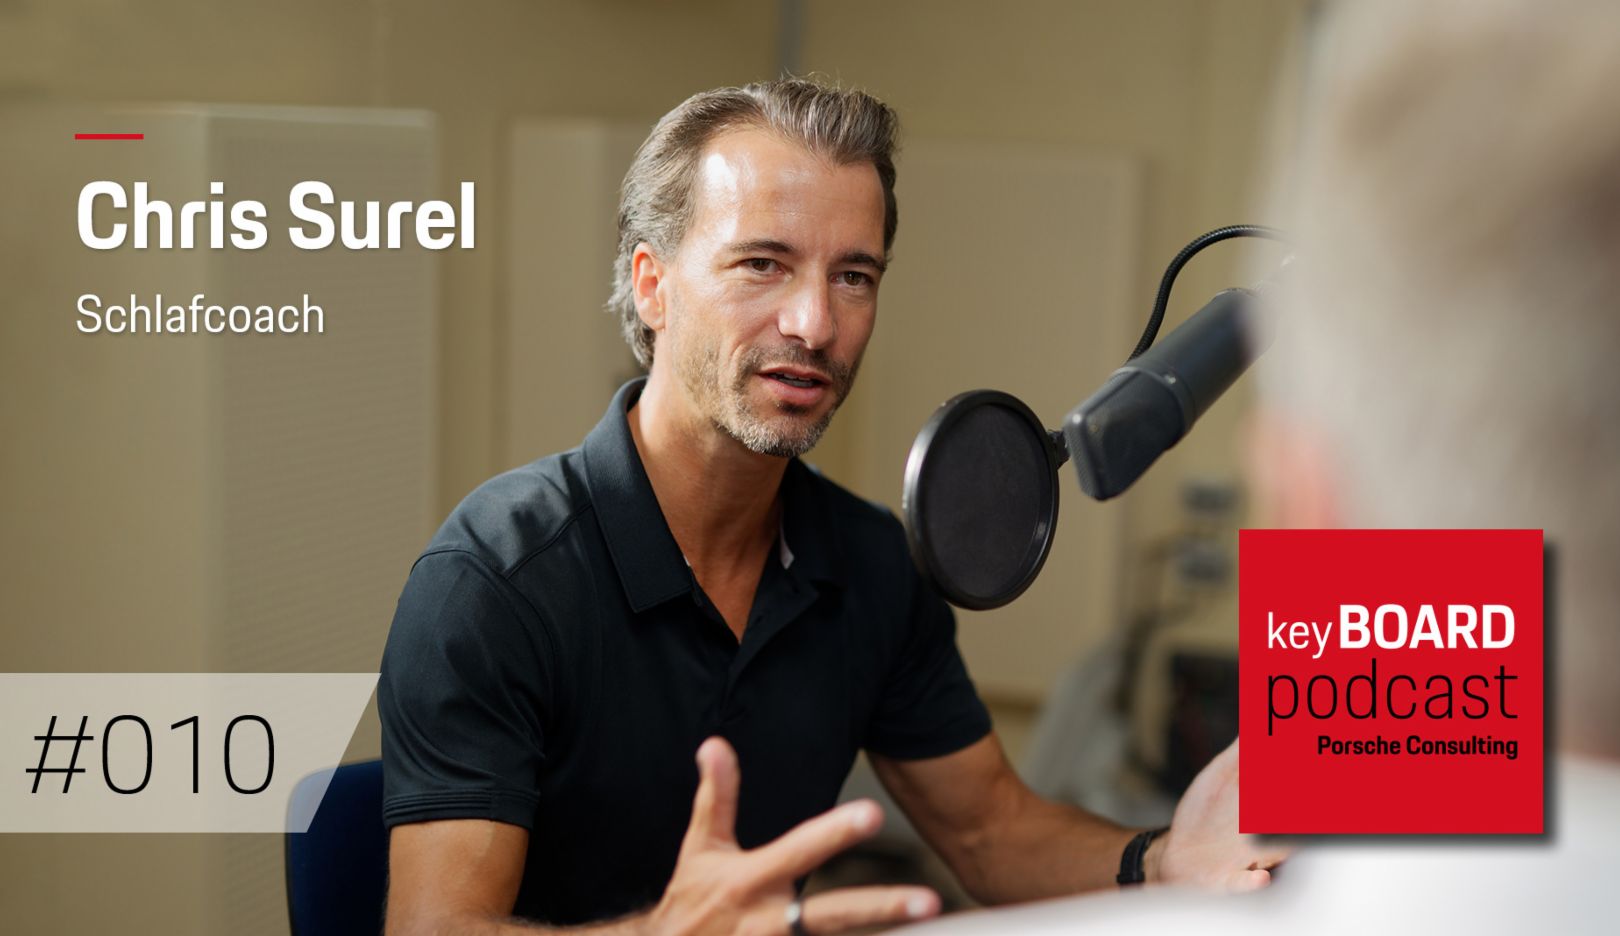 Porsche Consulting Podcast #010: Chris Surel 